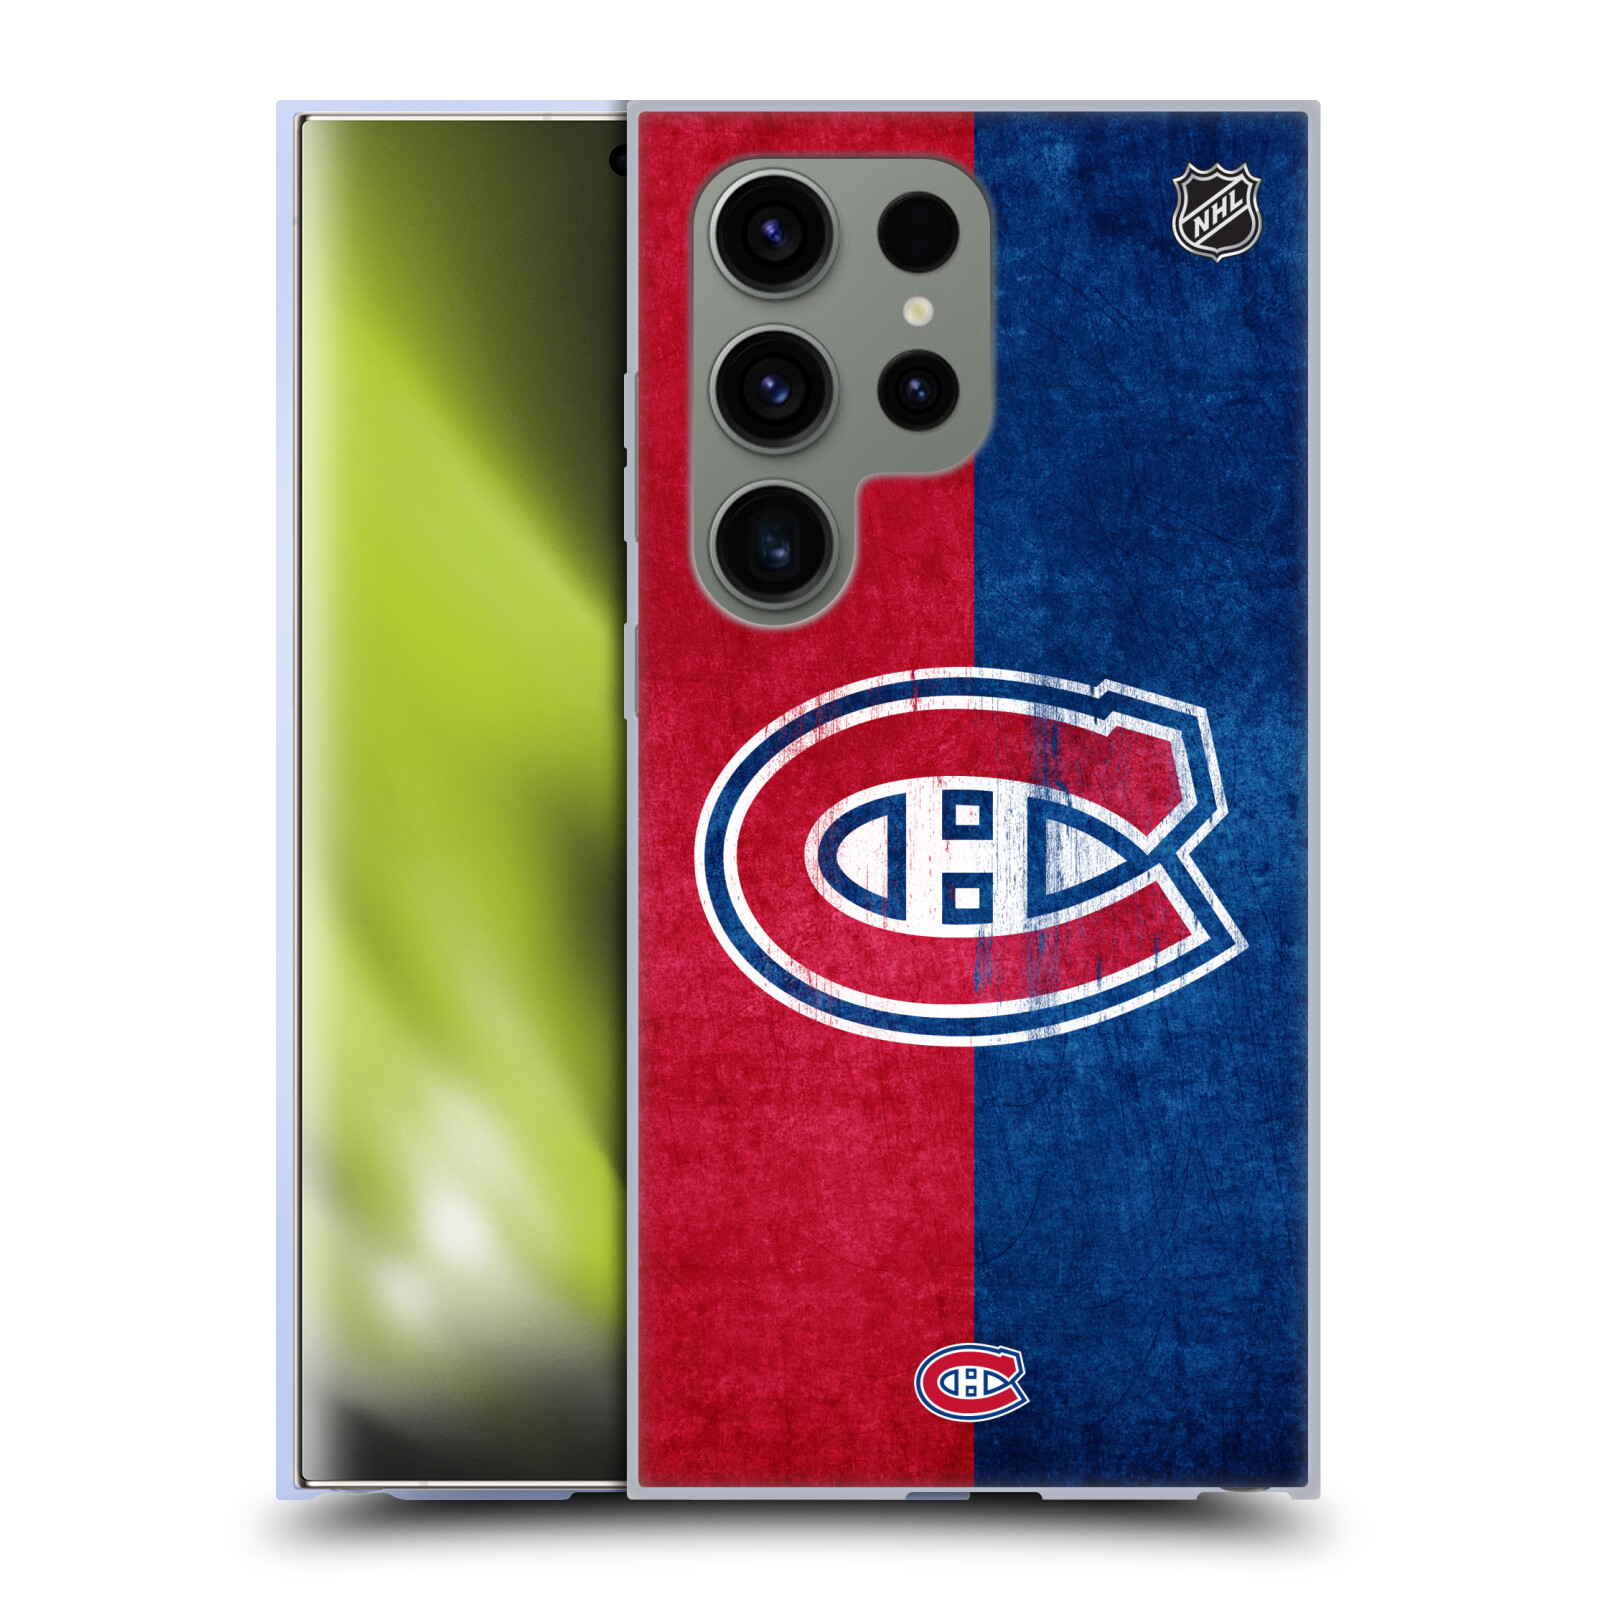 Silikonové lesklé pouzdro na mobil Samsung Galaxy S24 Ultra - NHL - Půlené logo Montreal Canadiens (Silikonový kryt, obal, pouzdro na mobilní telefon Samsung Galaxy S24 Ultra s licencovaným motivem NHL - Půlené logo Montreal Canadiens)